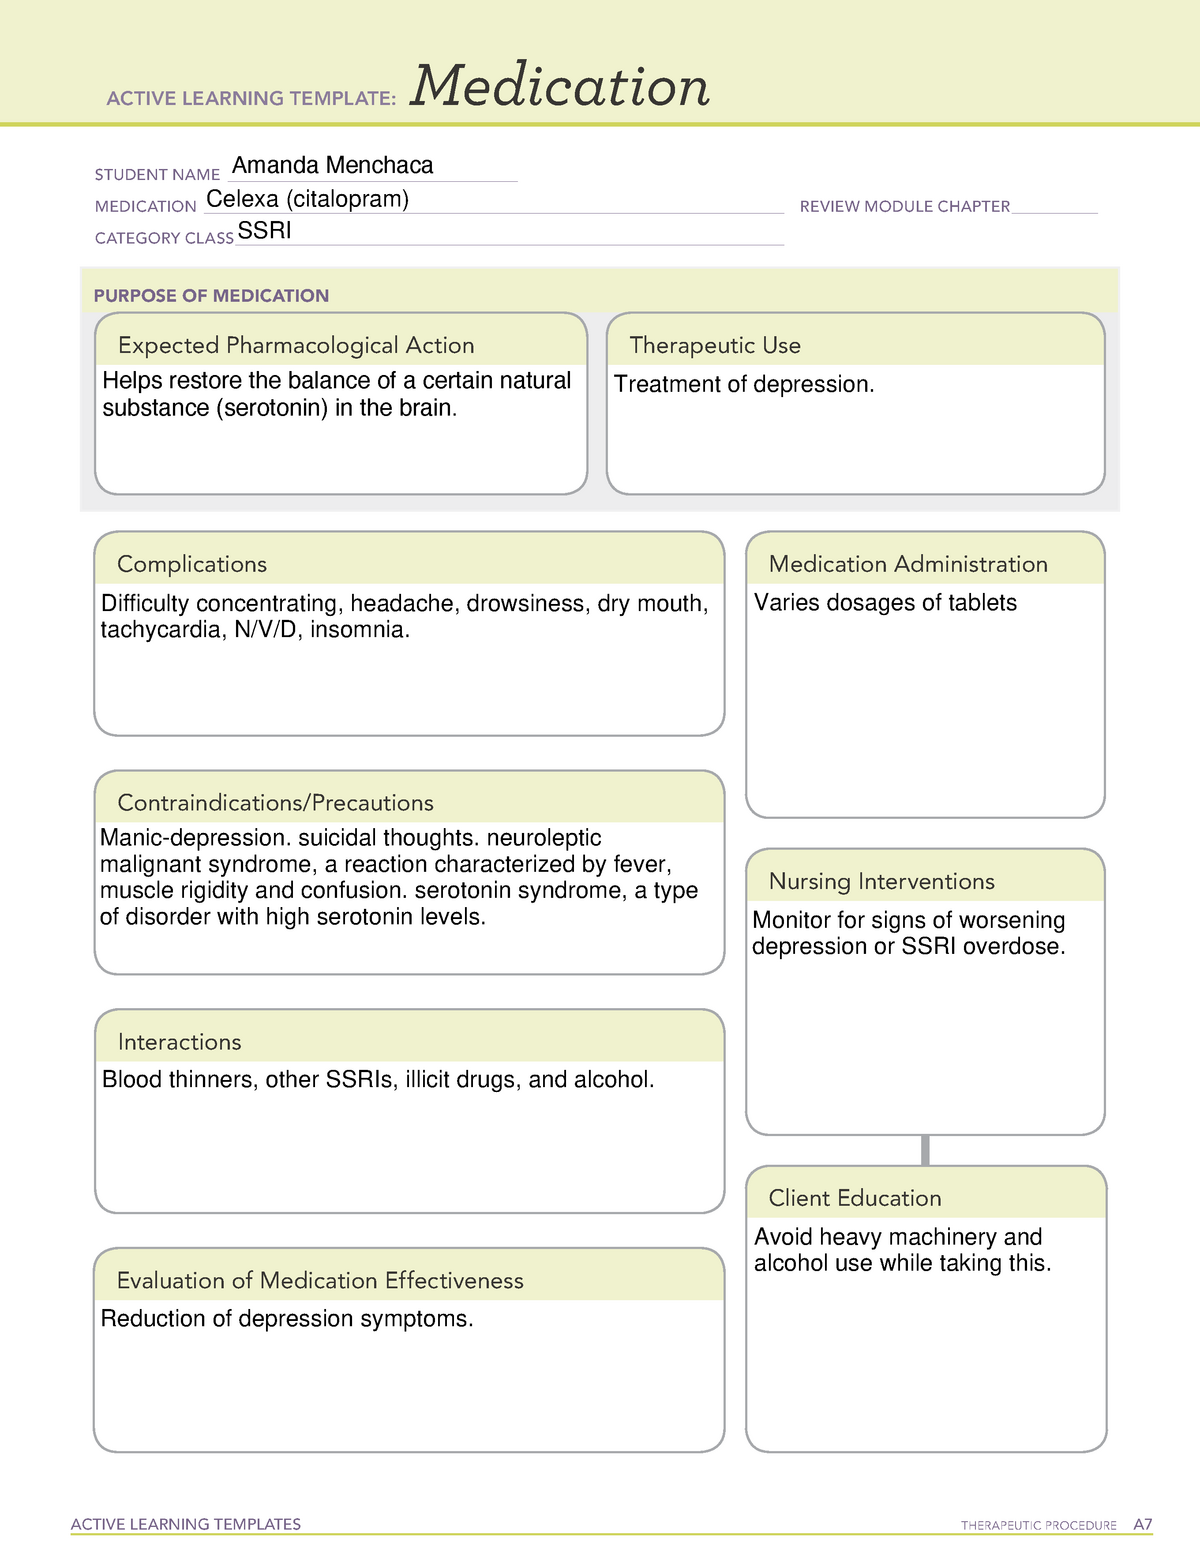 Celexa-MED - ATI medication card template - NUR20 - pharmacology Inside Medication Card Template